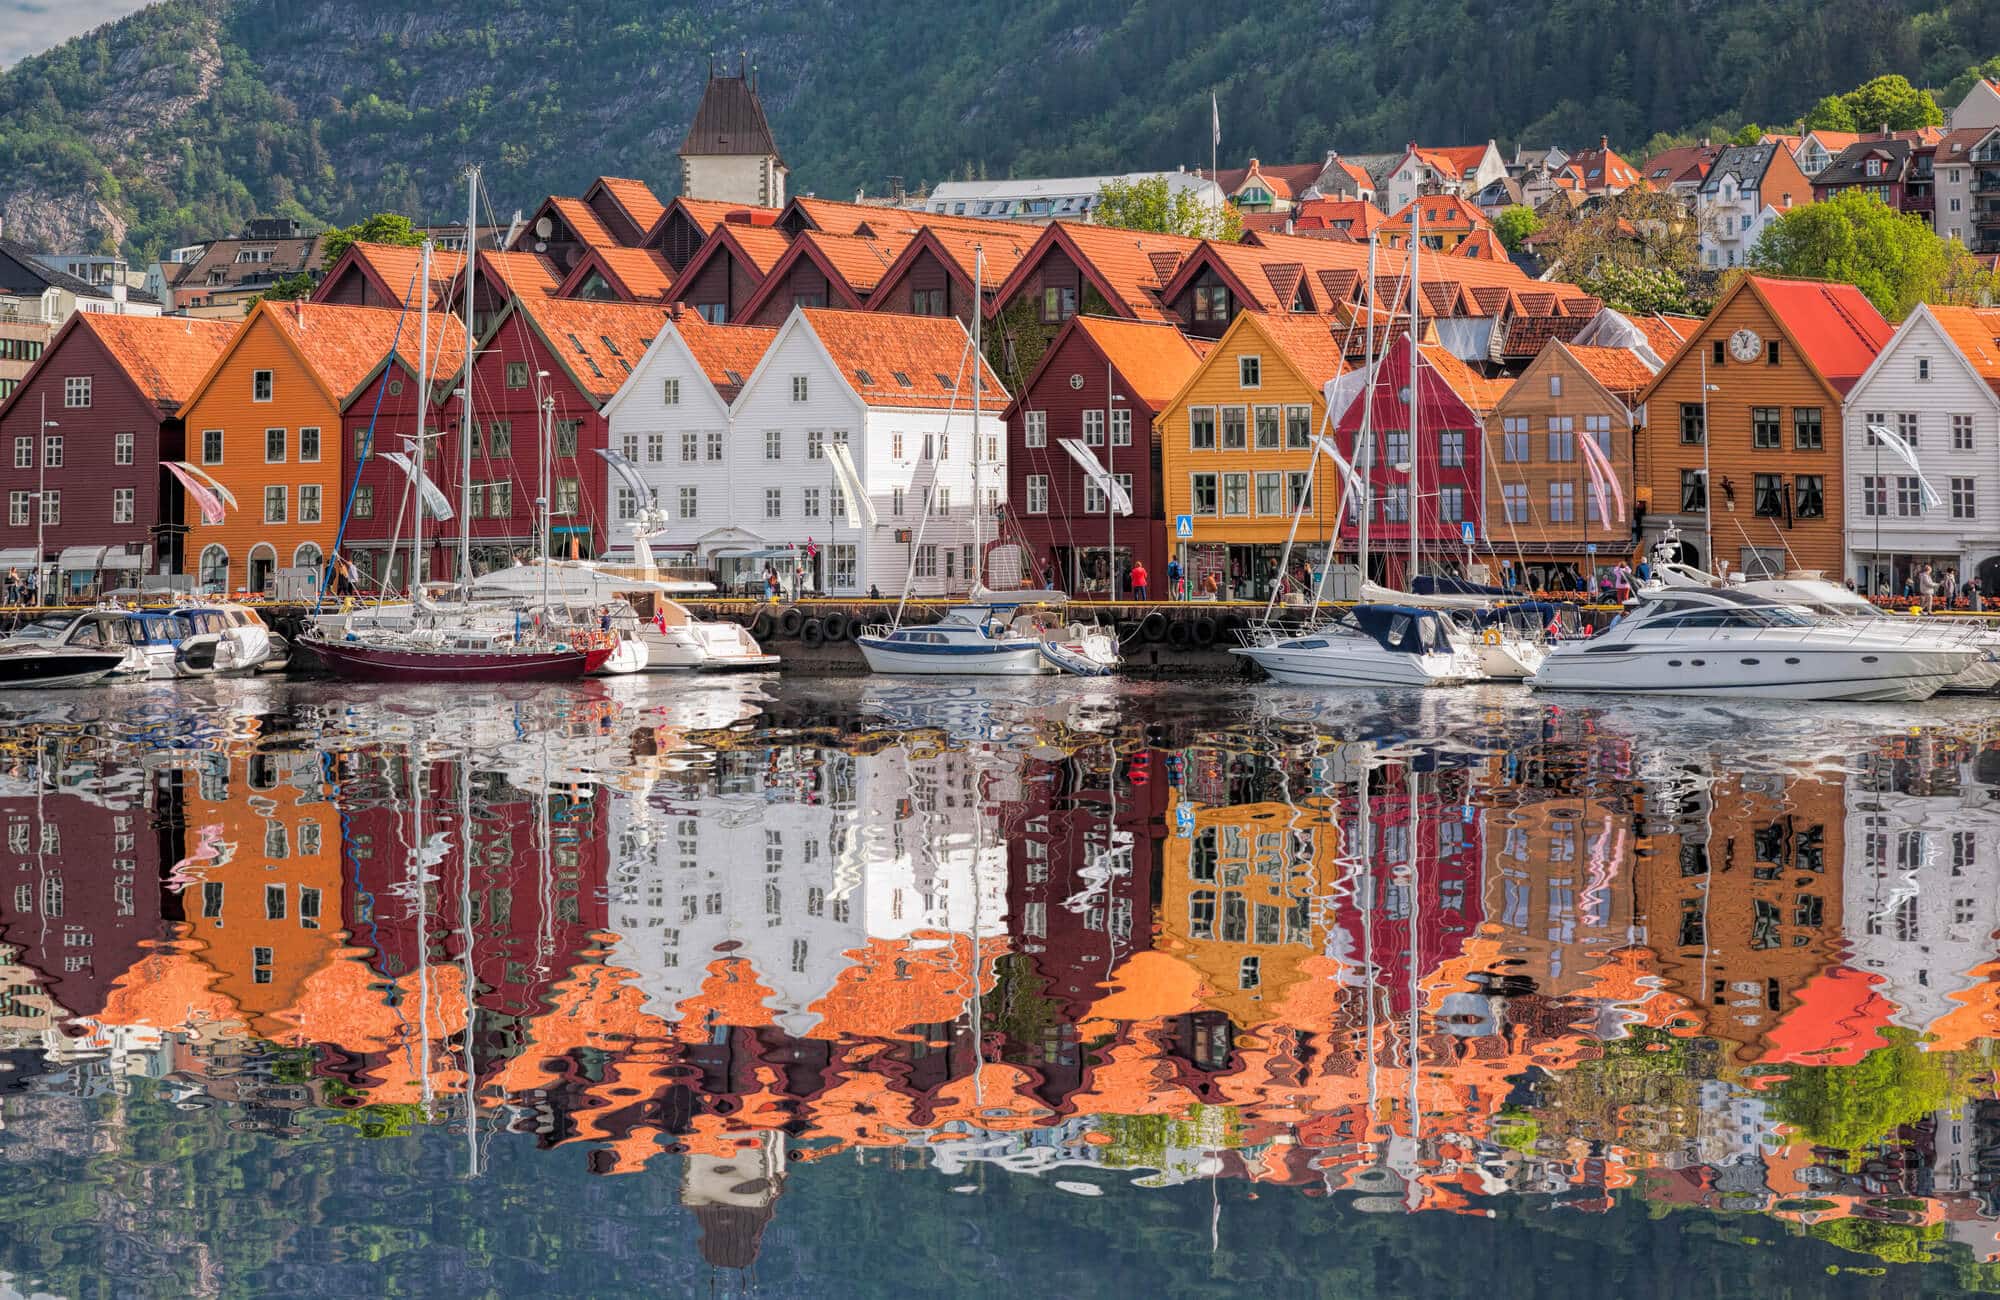 UNESCO World Heritage Listed Bryggen i Bergen (medieval wharfs) #bucketlist #travelinspo #norway #bergen